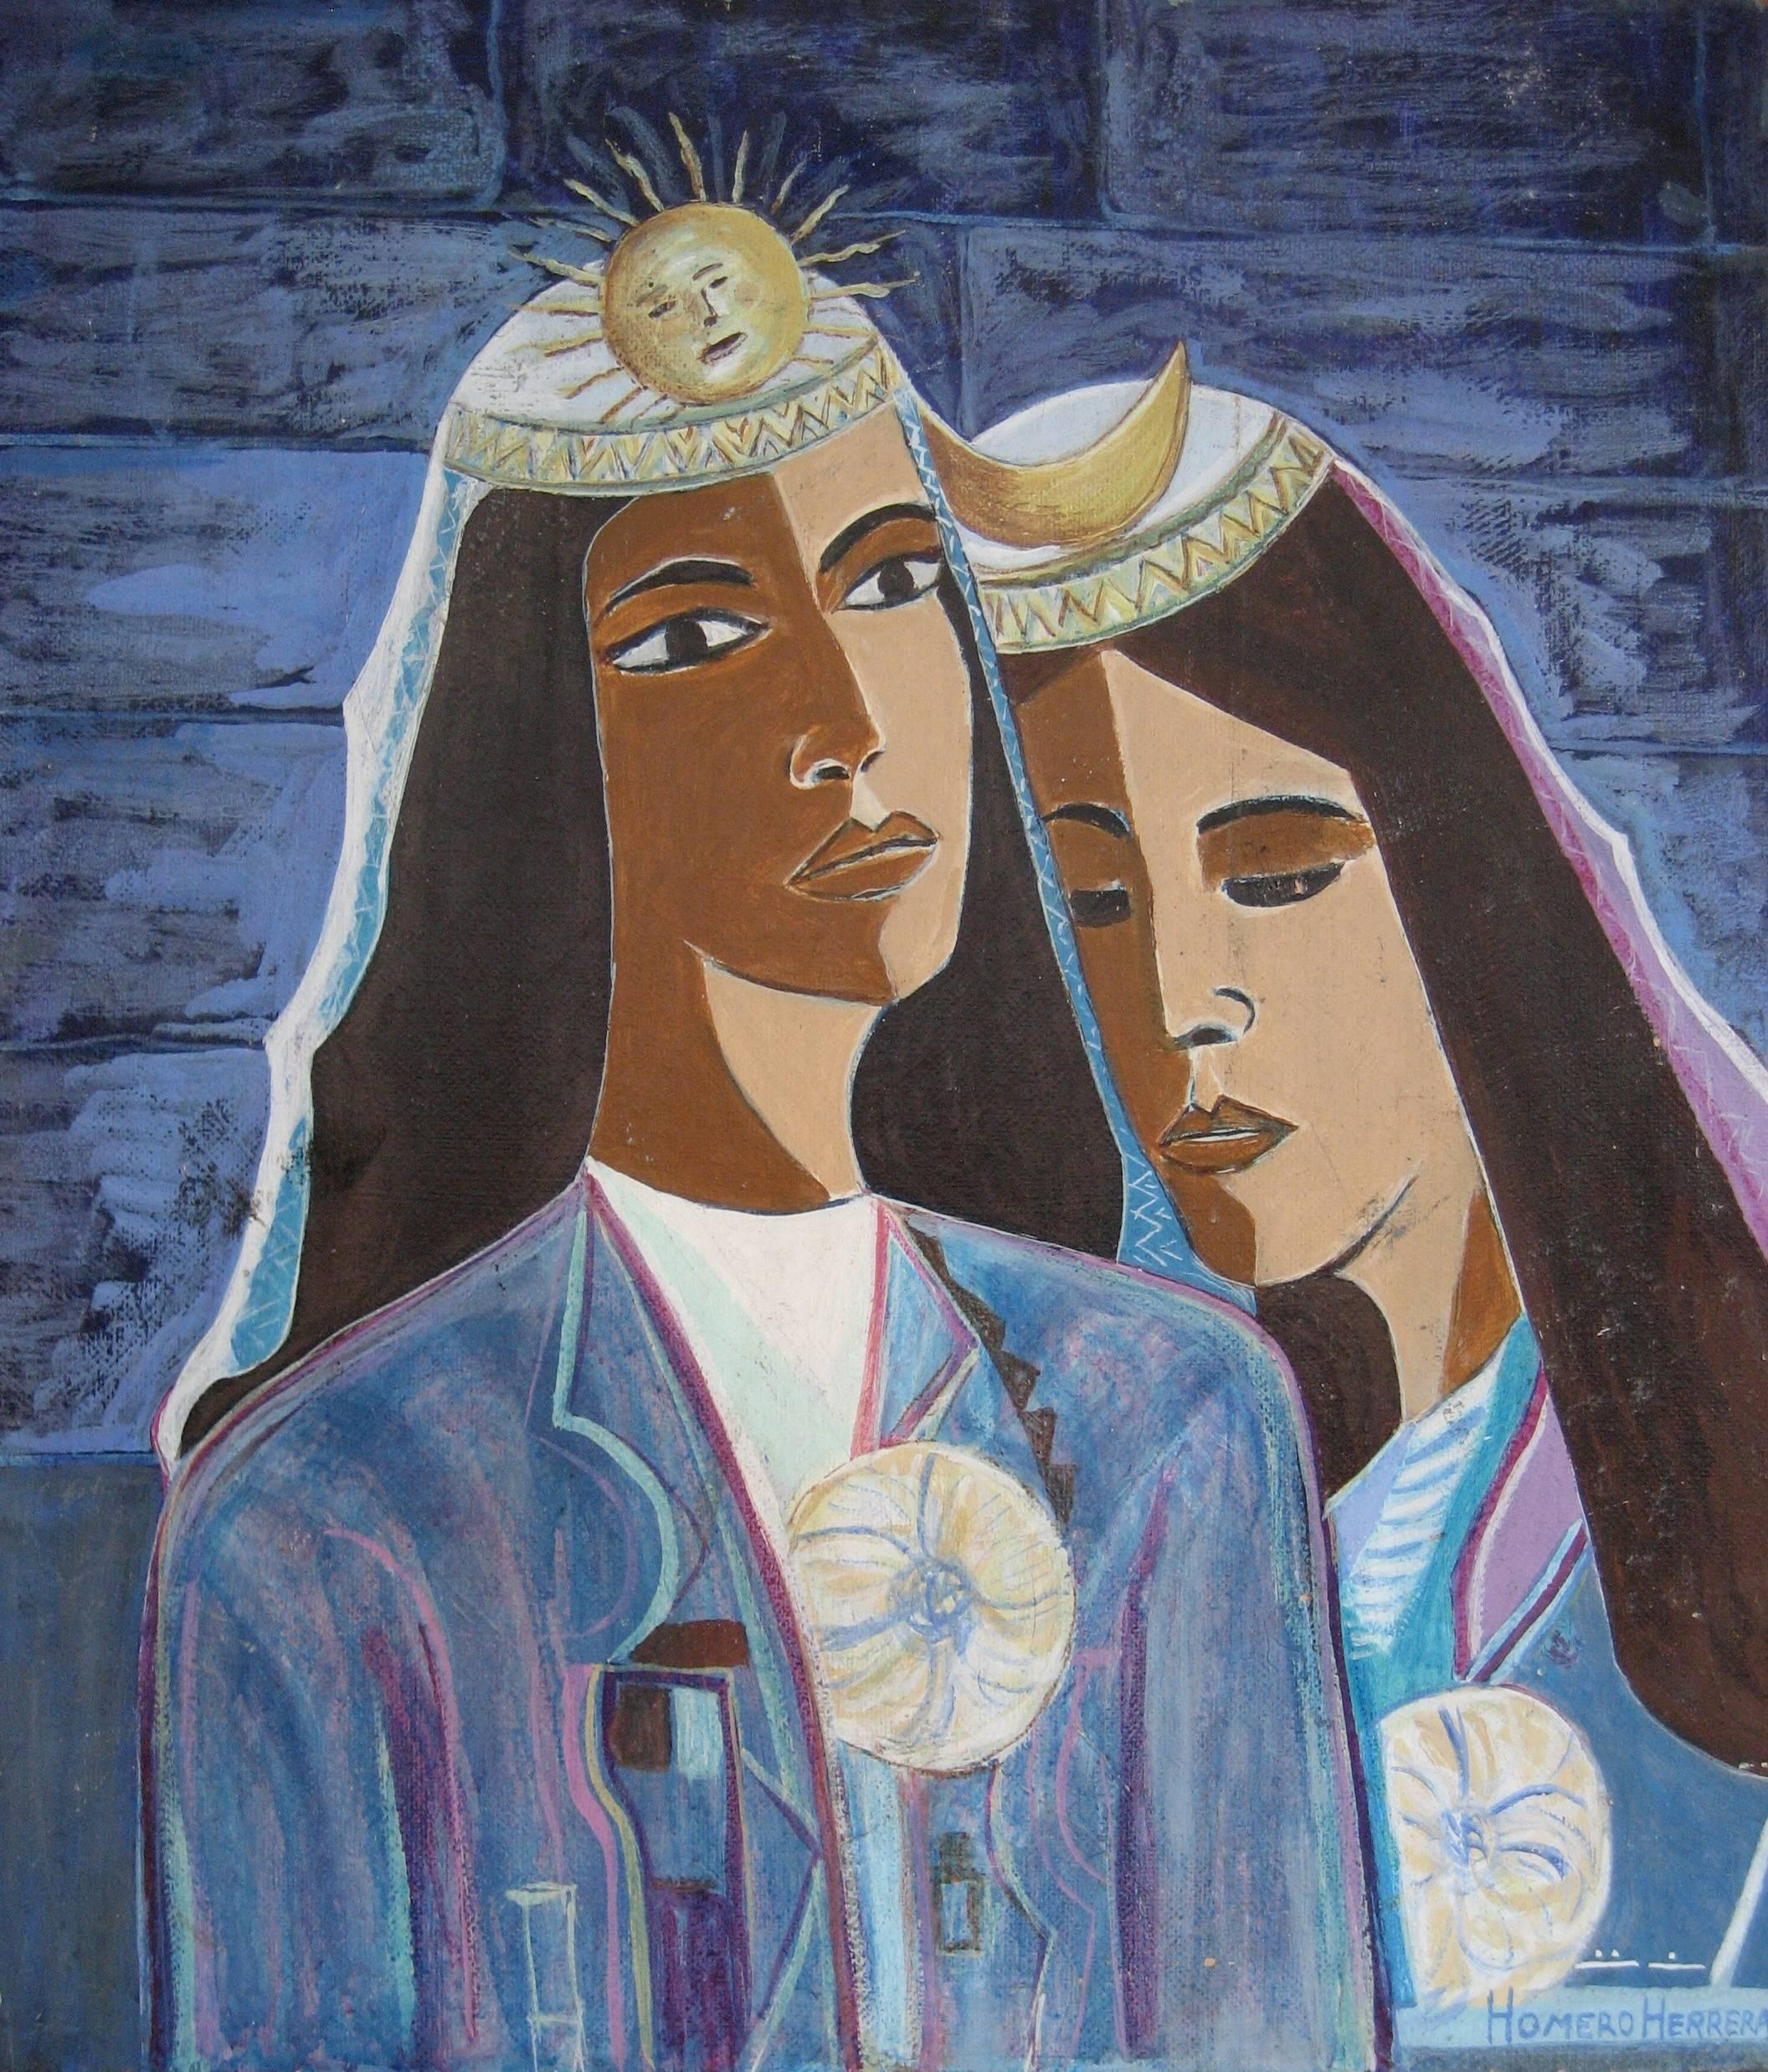 Homero Herrera Portrait Painting - "Inca and Coya" Celestial Portrait of Two Women, Oil Painting, Mid 20th Century